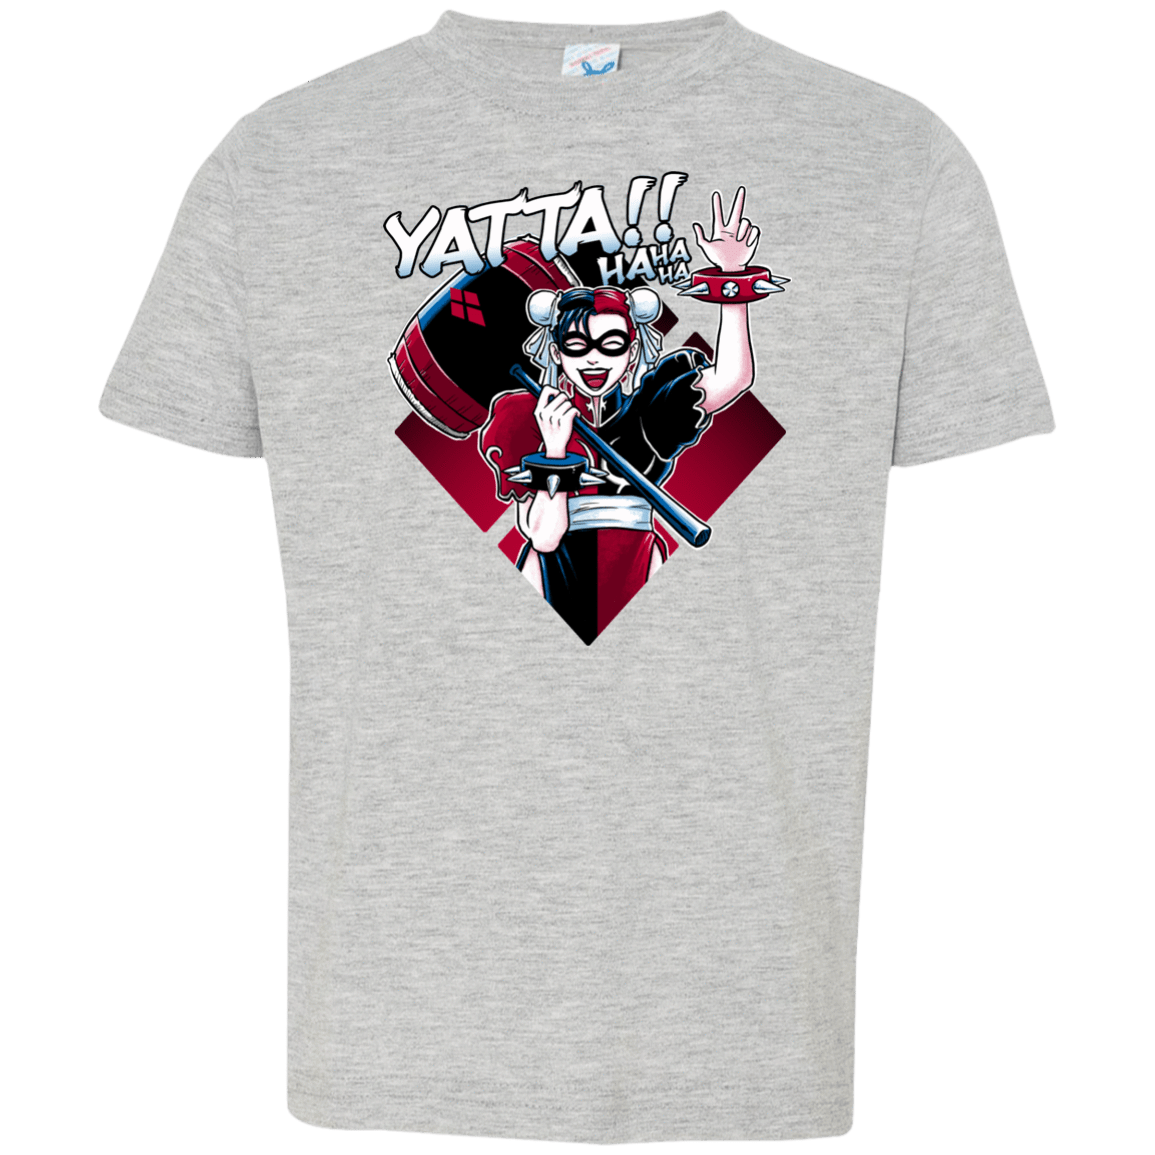 T-Shirts Heather Grey / 2T Harley Yatta Toddler Premium T-Shirt